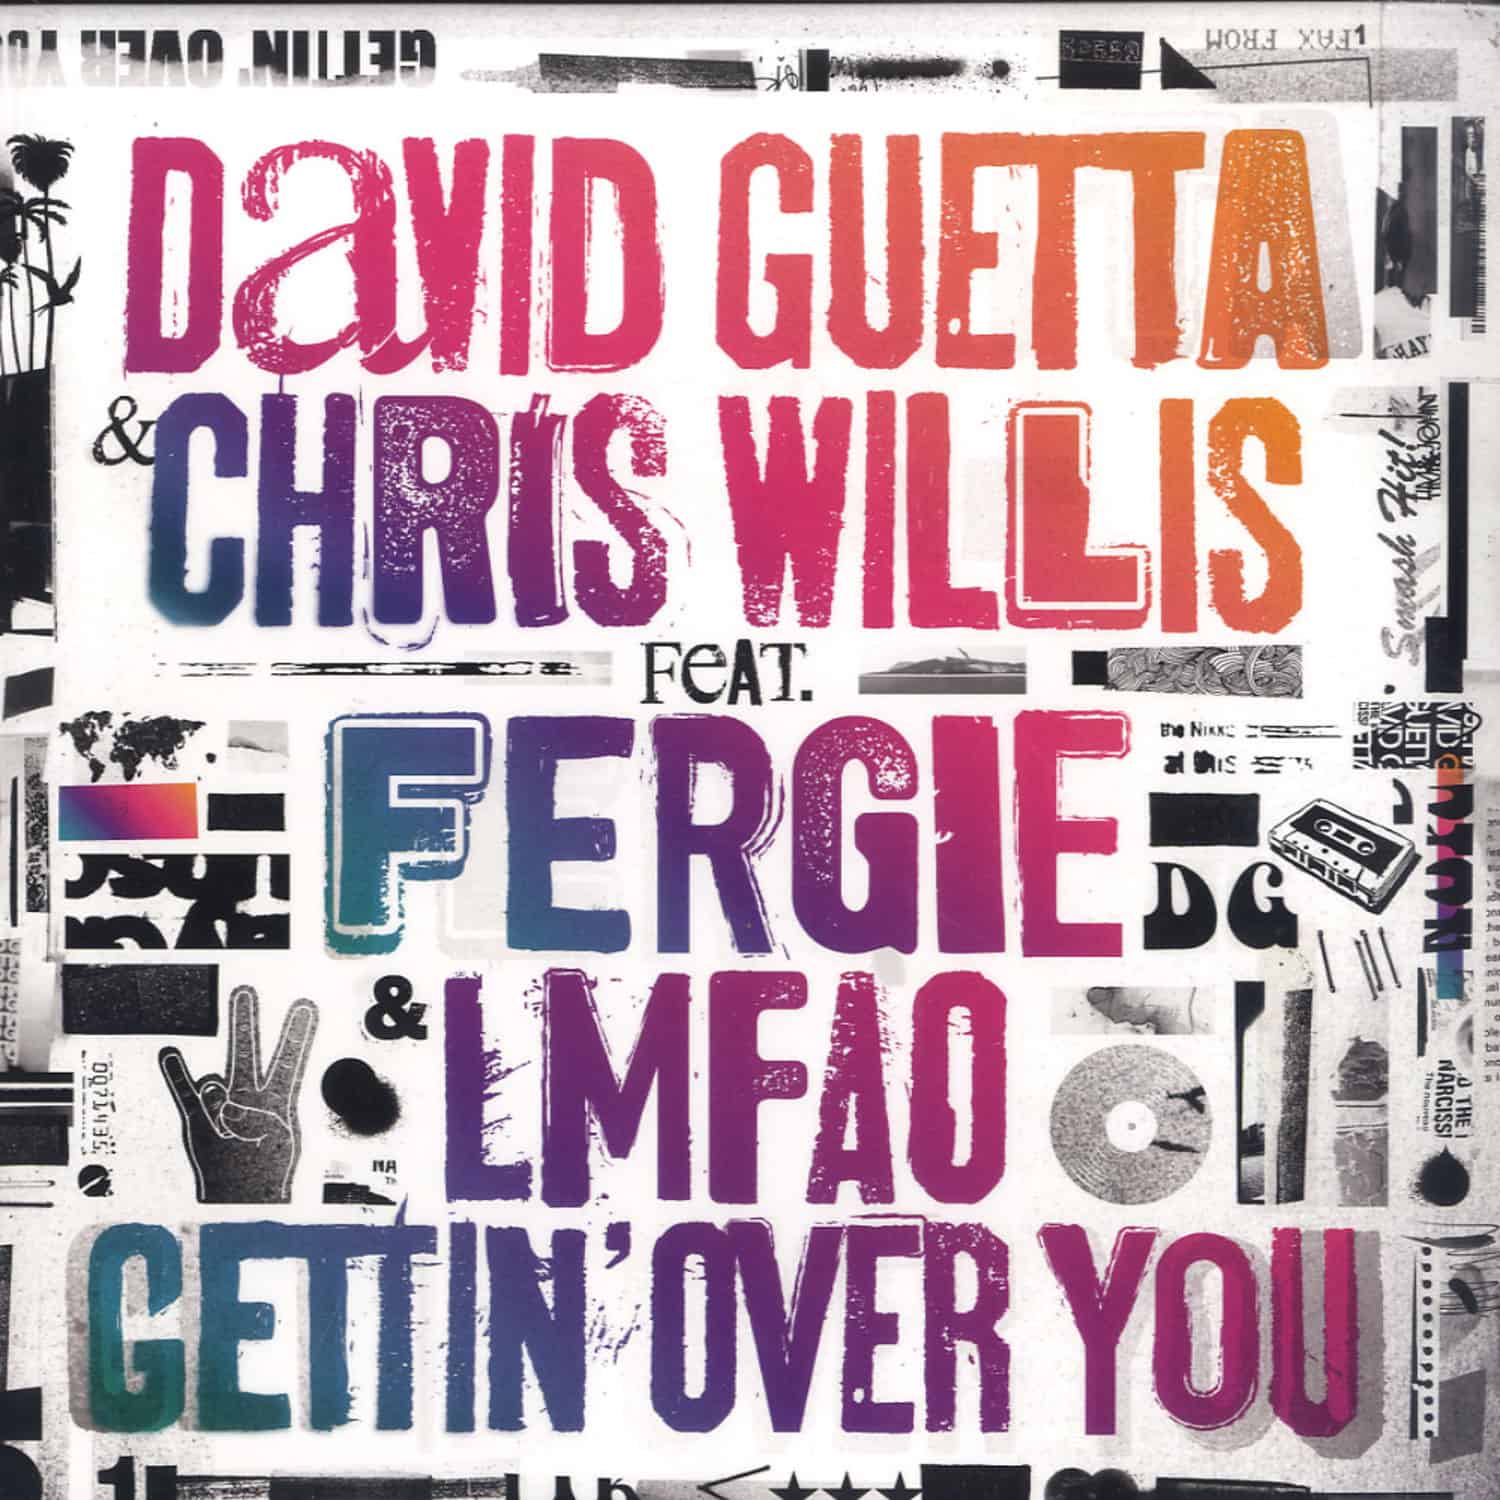 David Guetta & Chris Willis ft. Fergie & LMFAO - GETTIN OVER YOU 